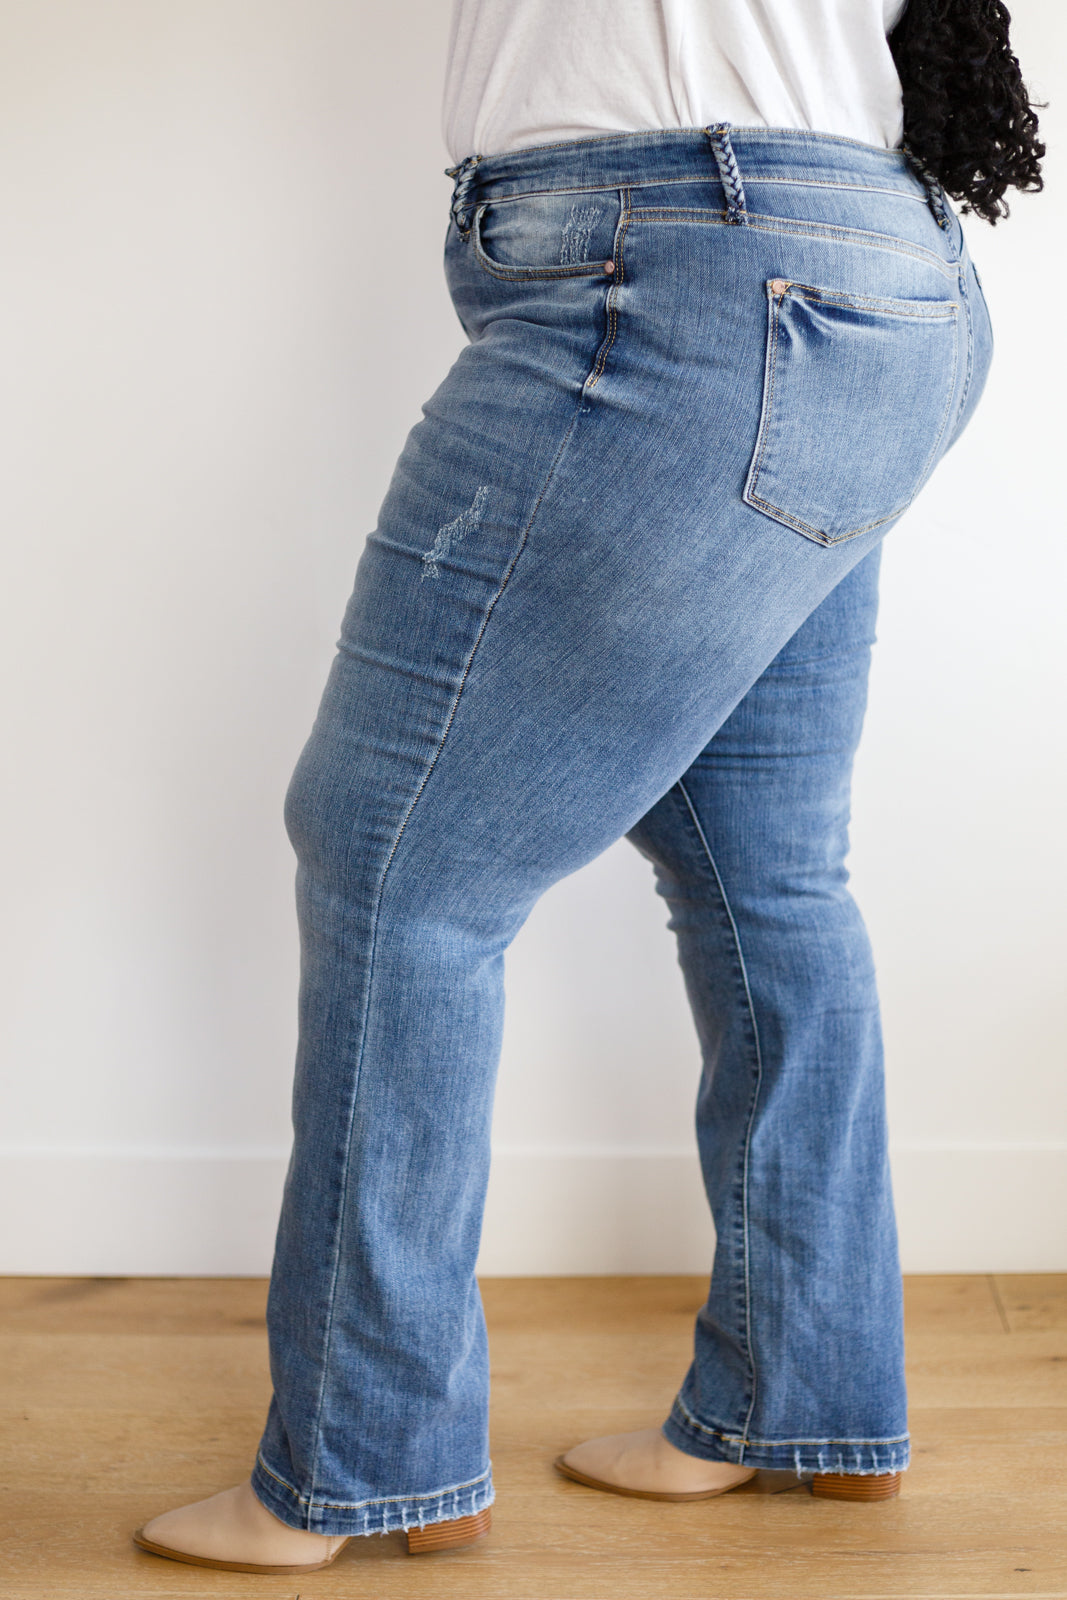 Judy Blue Rapunzel Braided Belt Loop Mid Rise Jeans 14W Medium Wash 